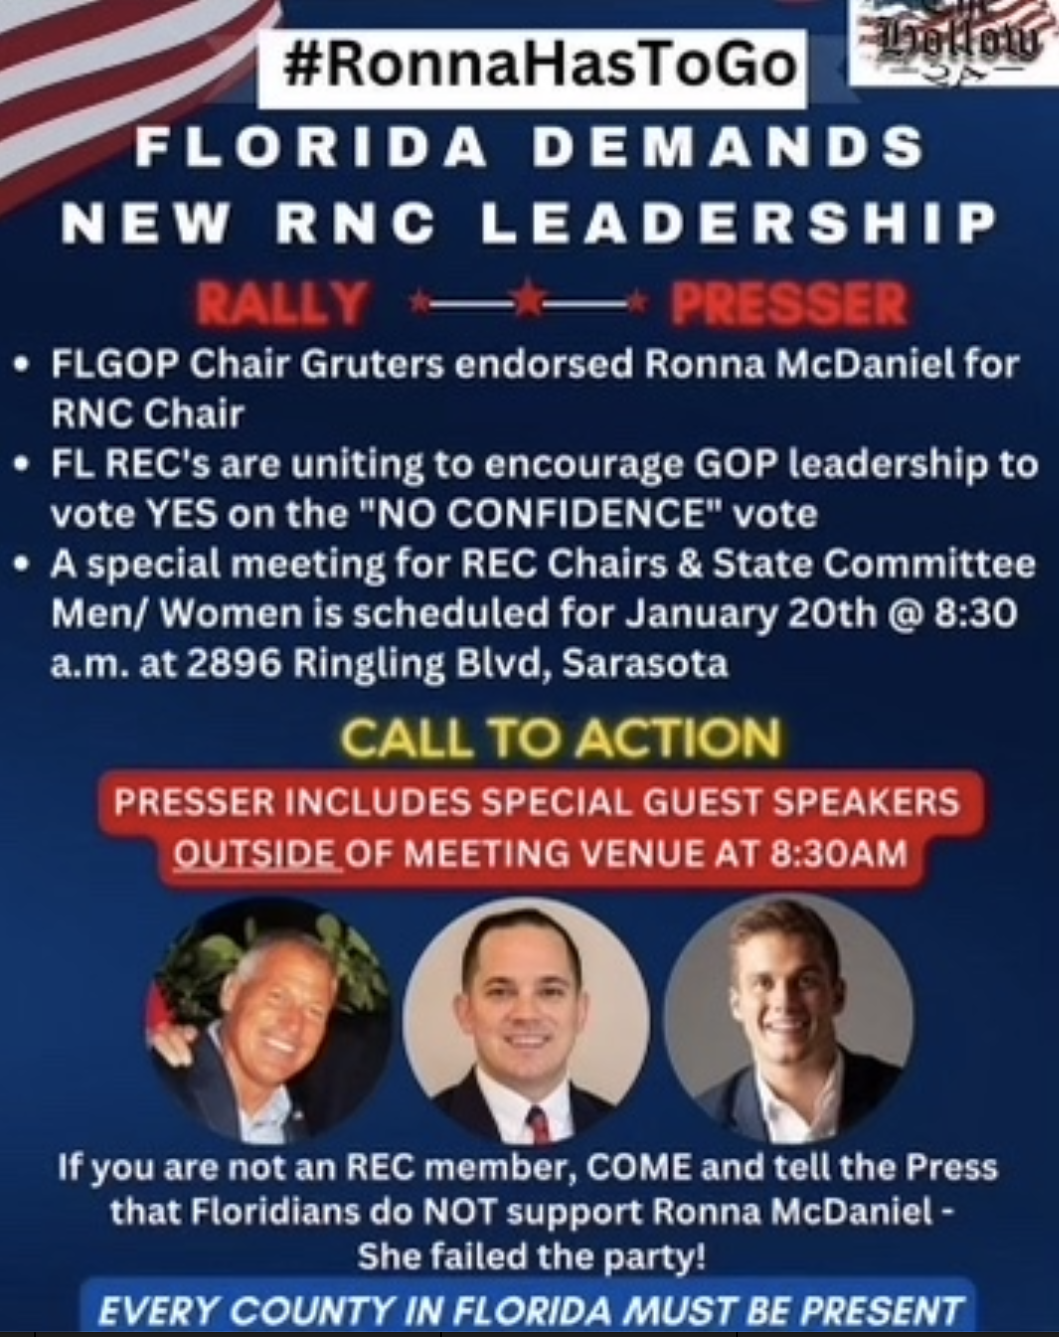 LIVESTREAM 0830 EST: Florida Demands New RNC Leadership Rally/Presser